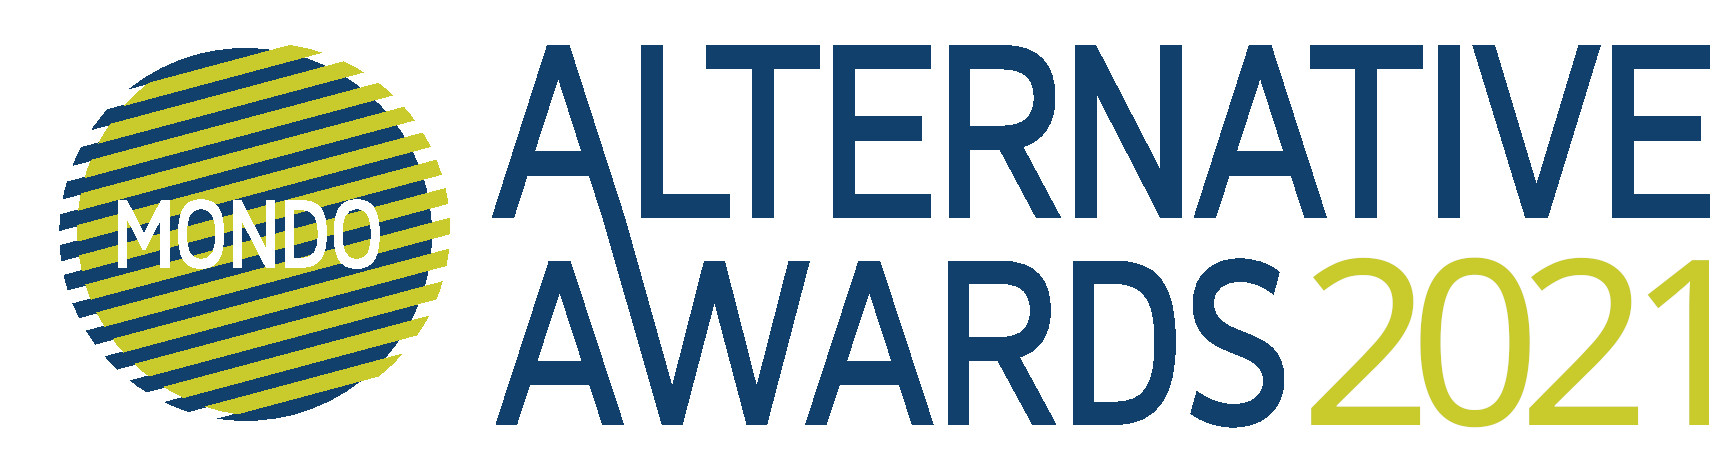 Mondo Alternative Awards 2021 logo award